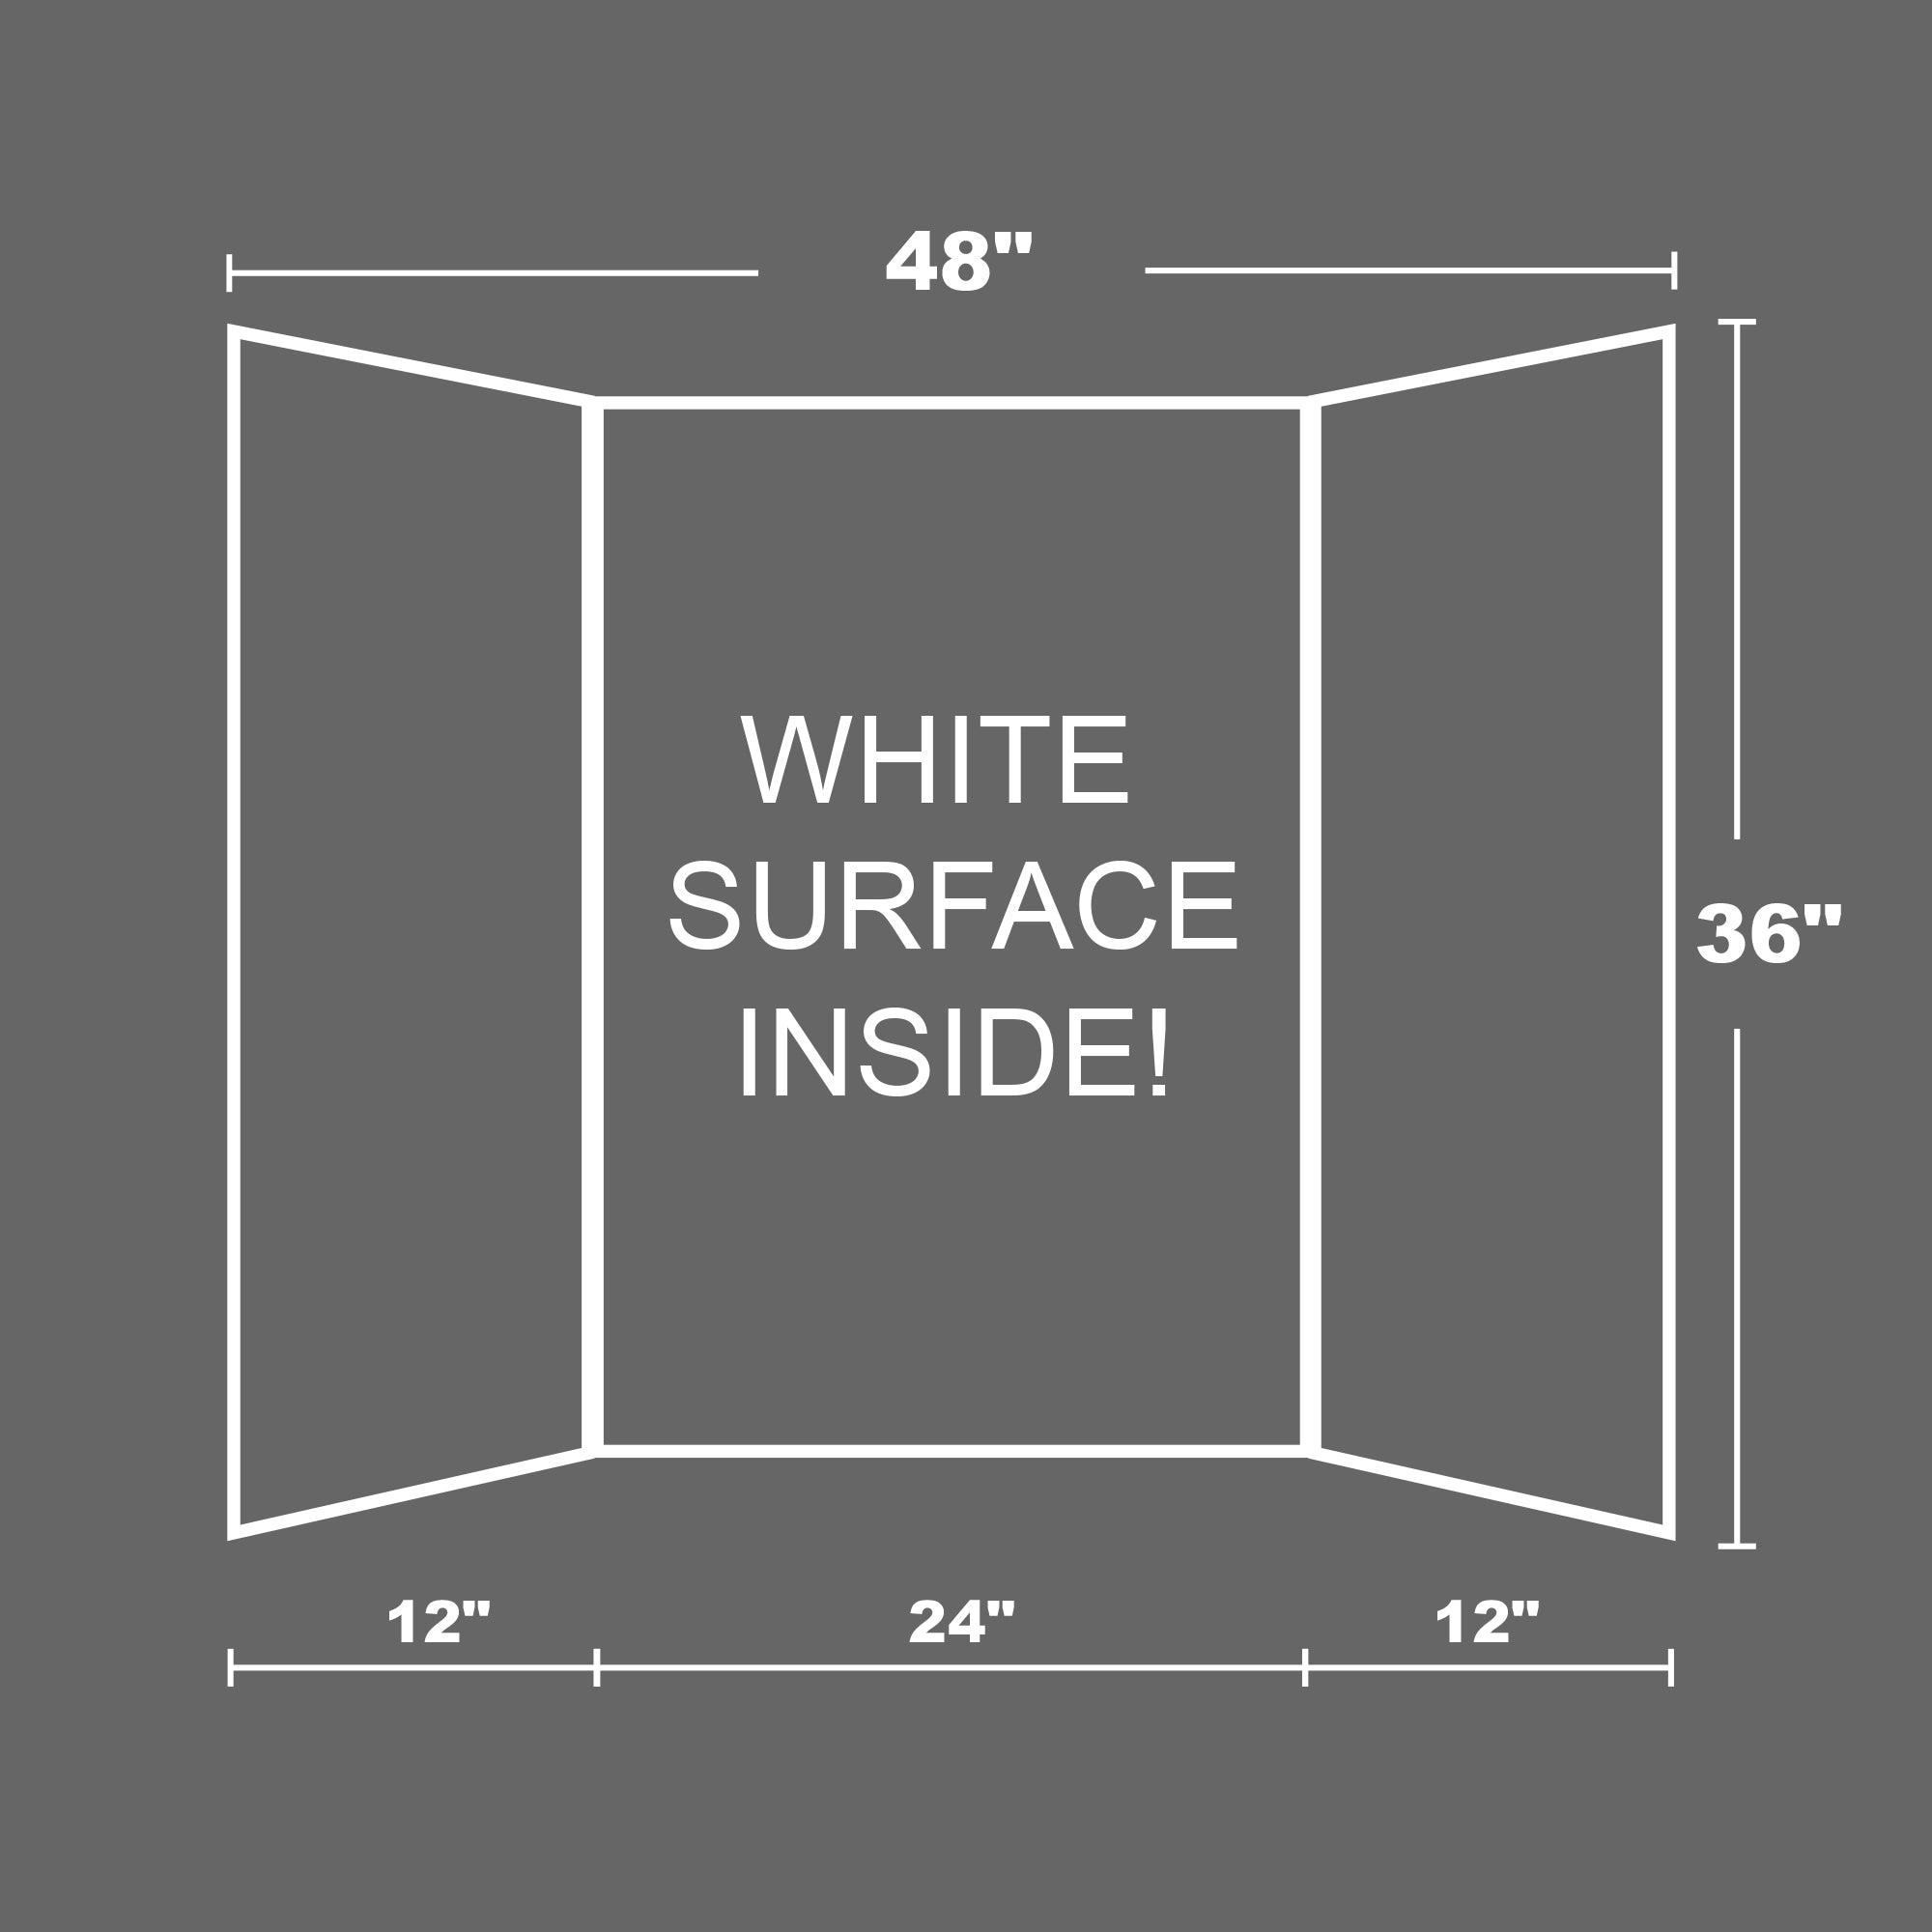 12 Pack: Corrugated Tri-Fold Display Board, 36 x 48